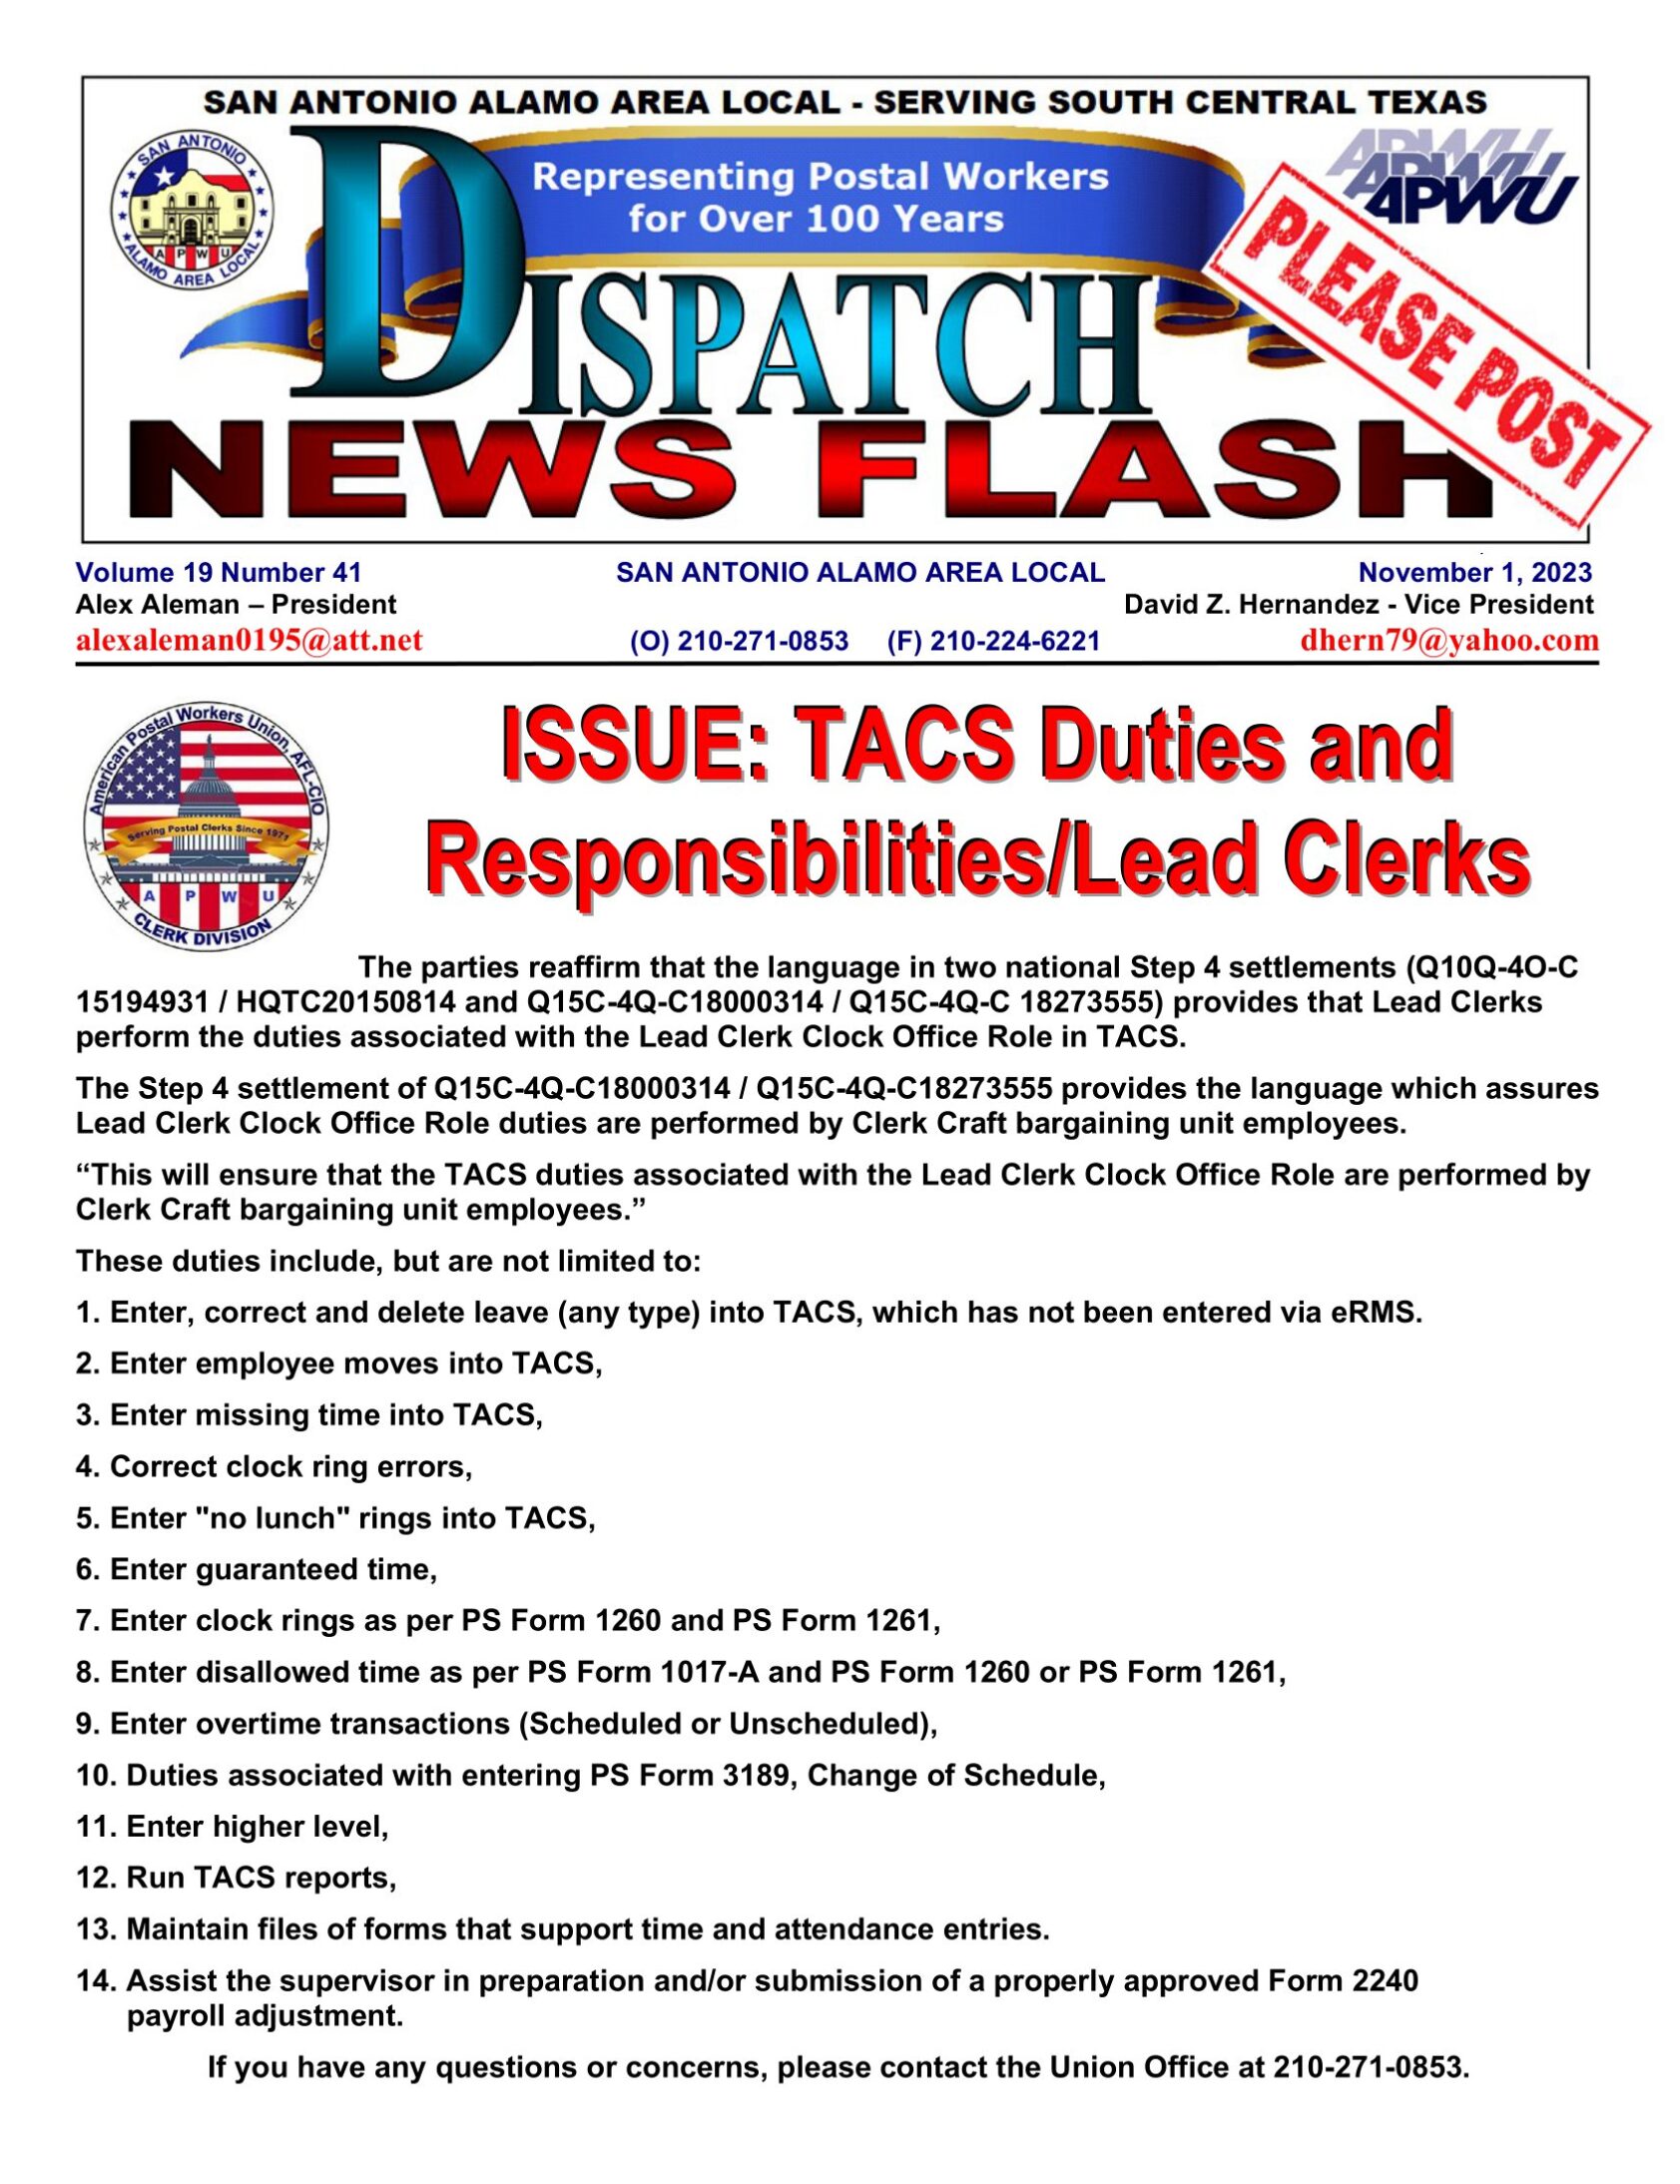 NewsFlash 19-41 TACS Duties Lead Clerks - 